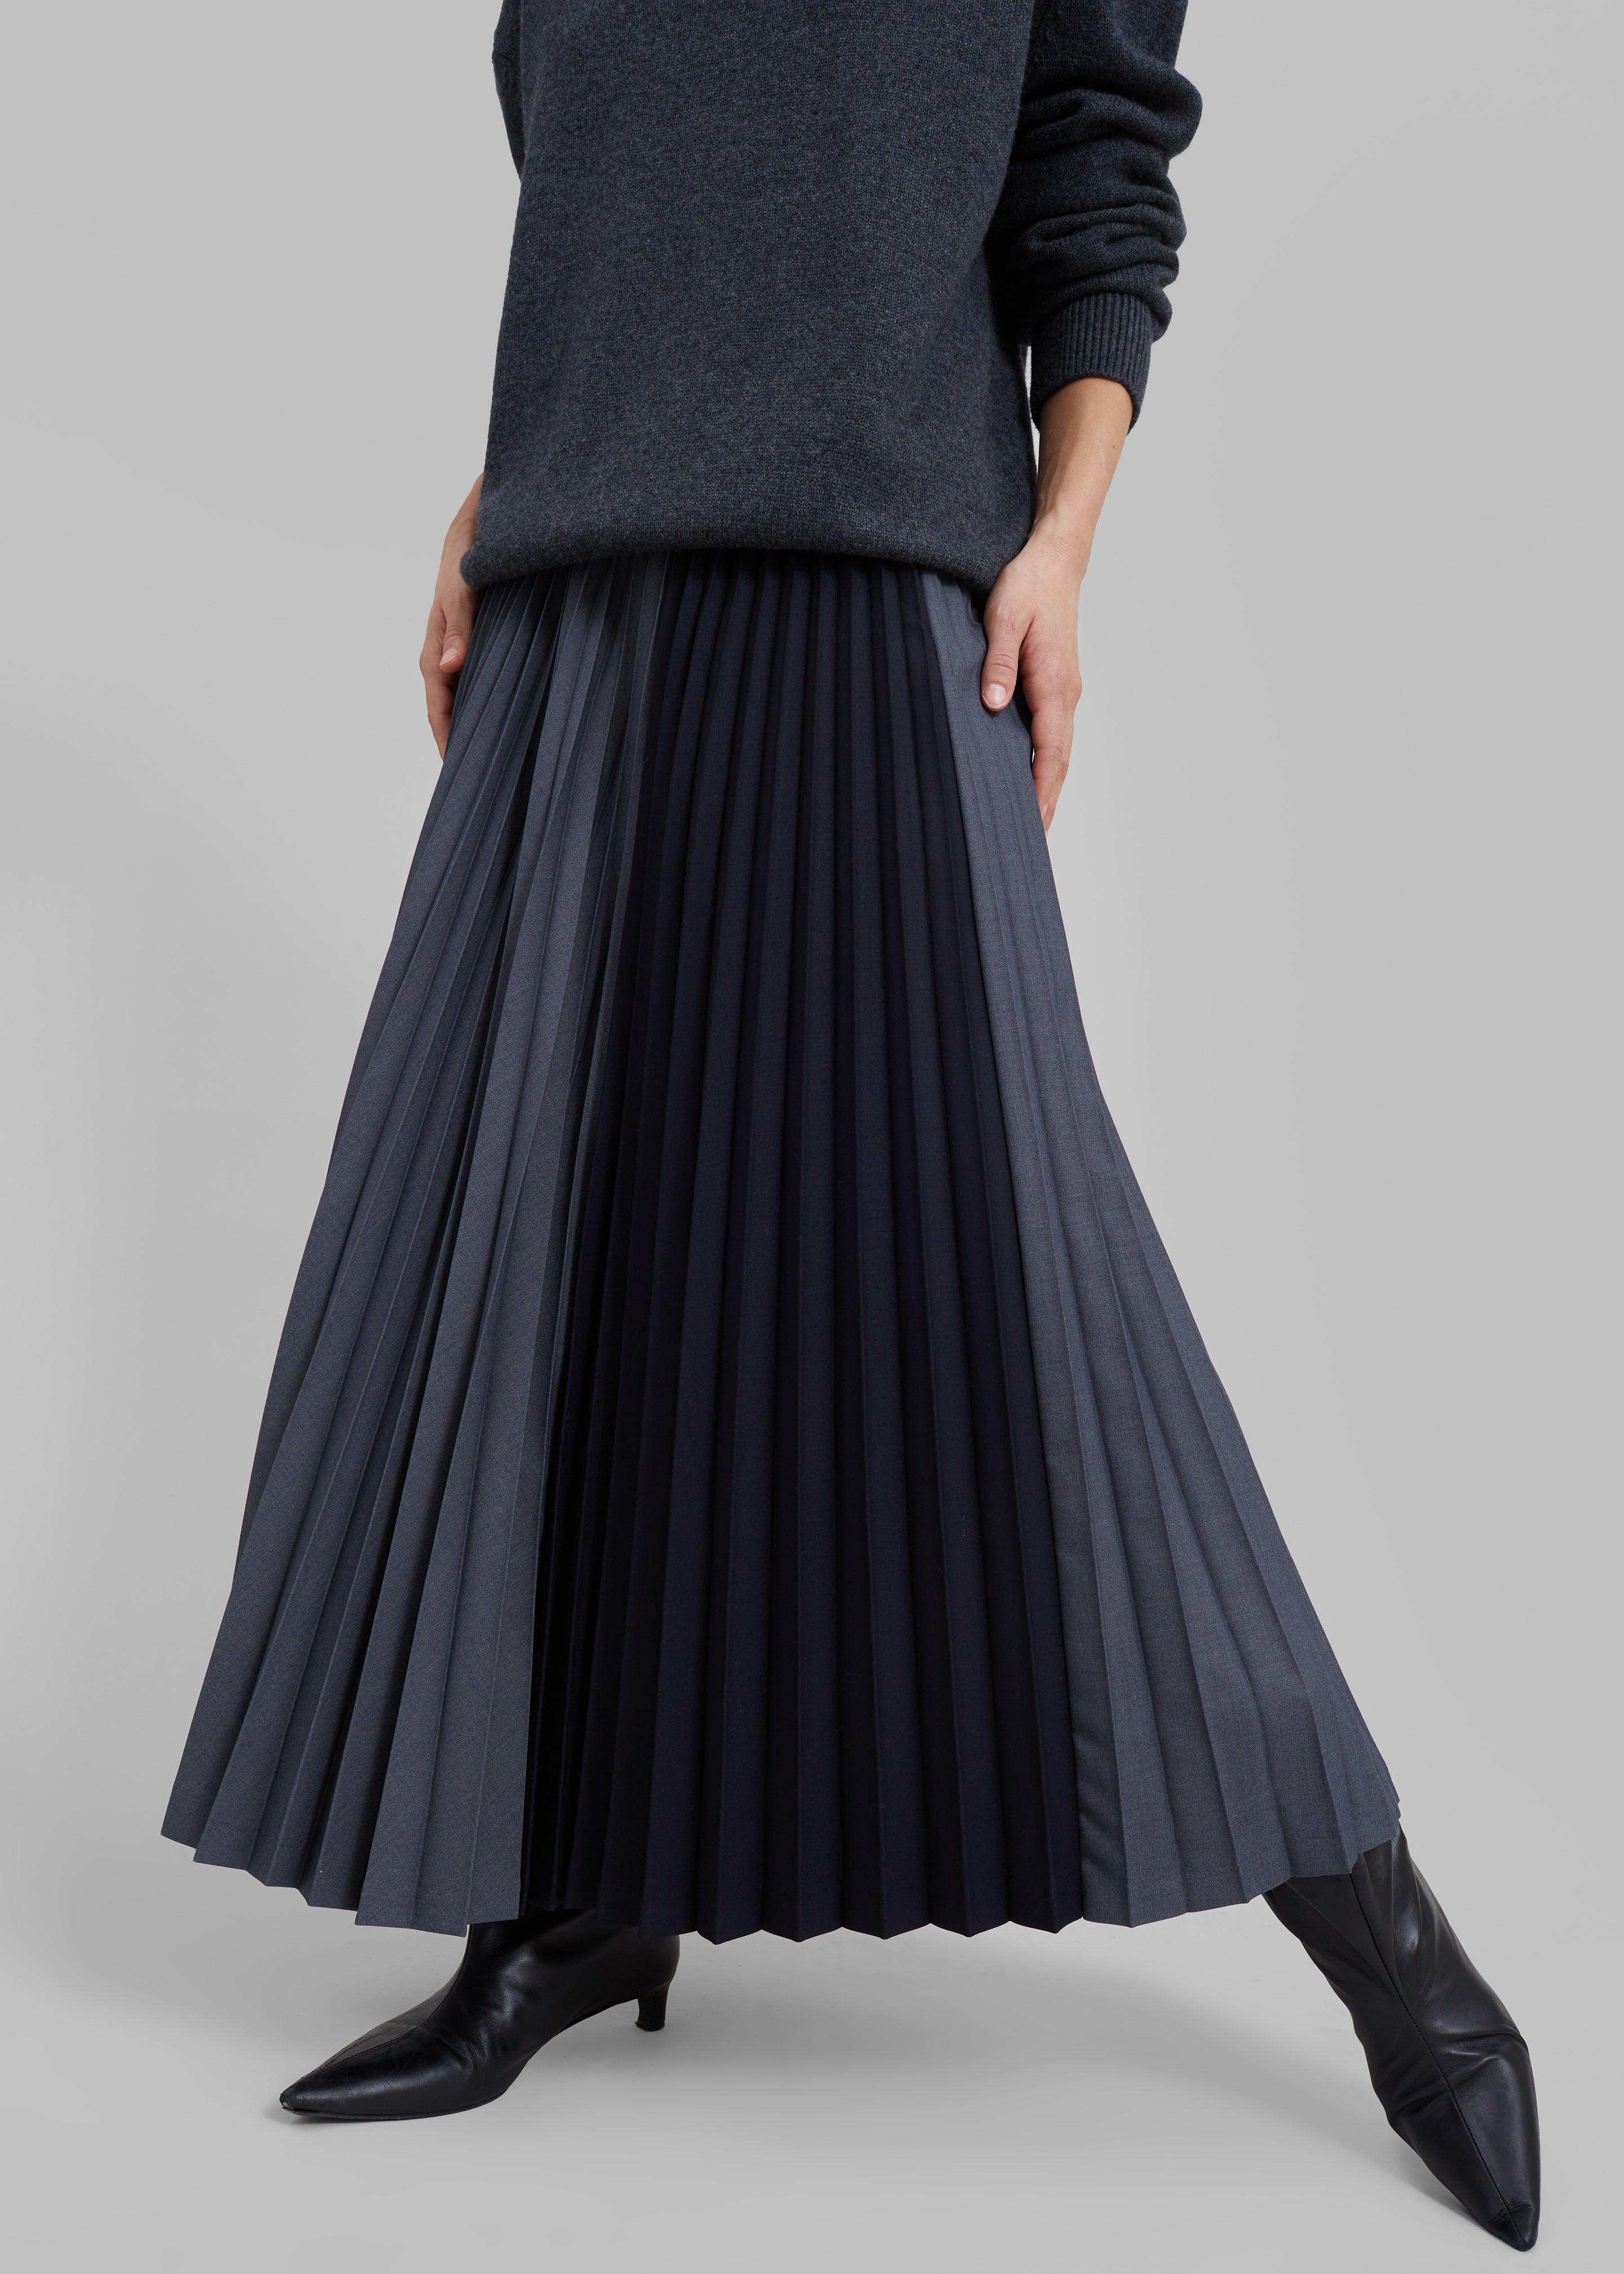 Orem Pleated Skirt - Charcoal - 1